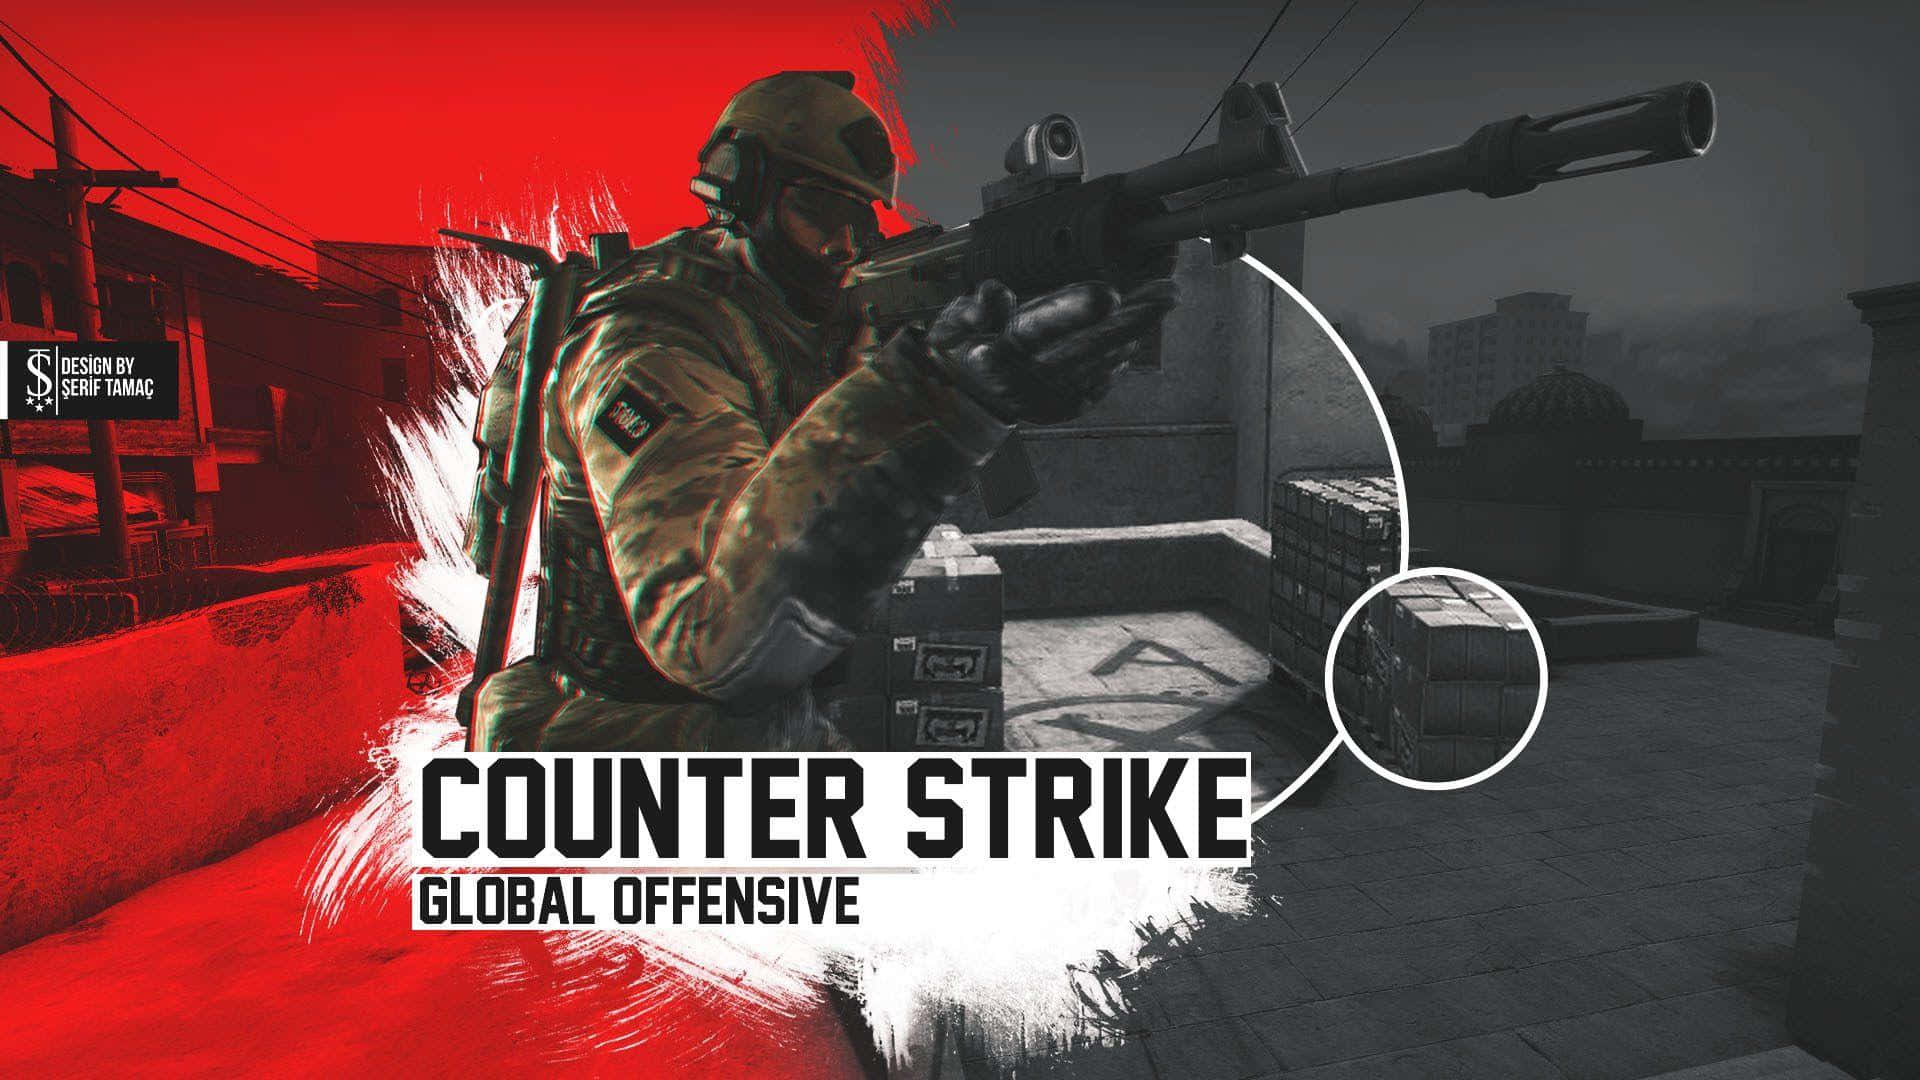 100+] Counter Strike Global Offensive Desktop Wallpapers